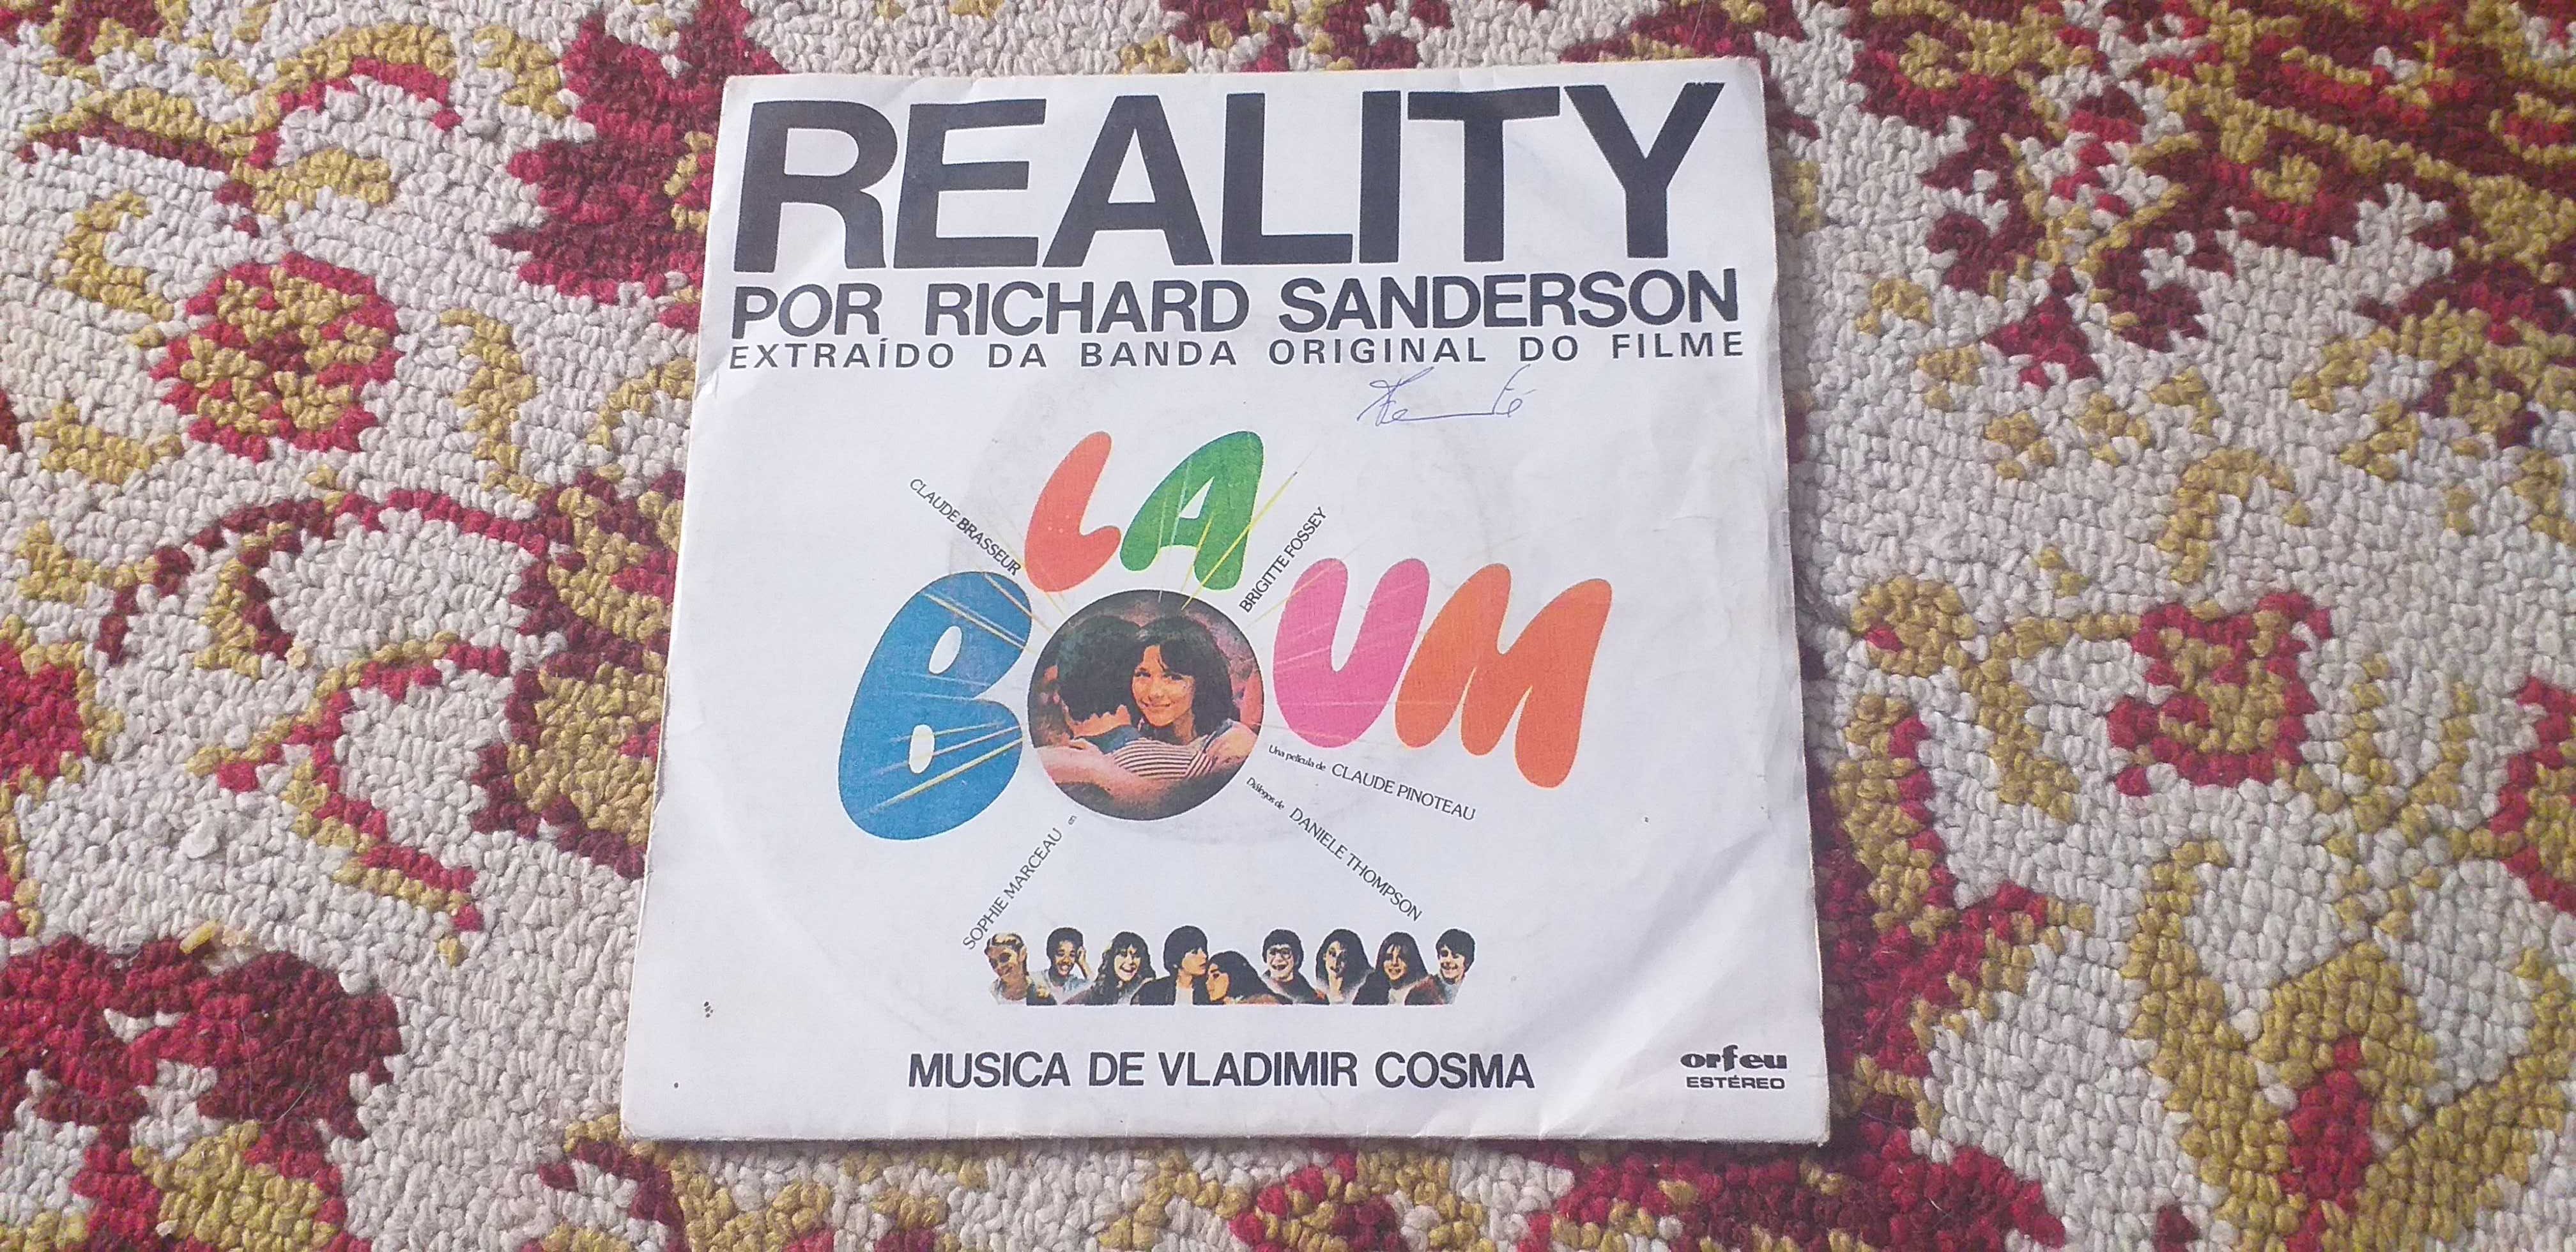 Richard Sanderson - Reality - single - portes incluidos